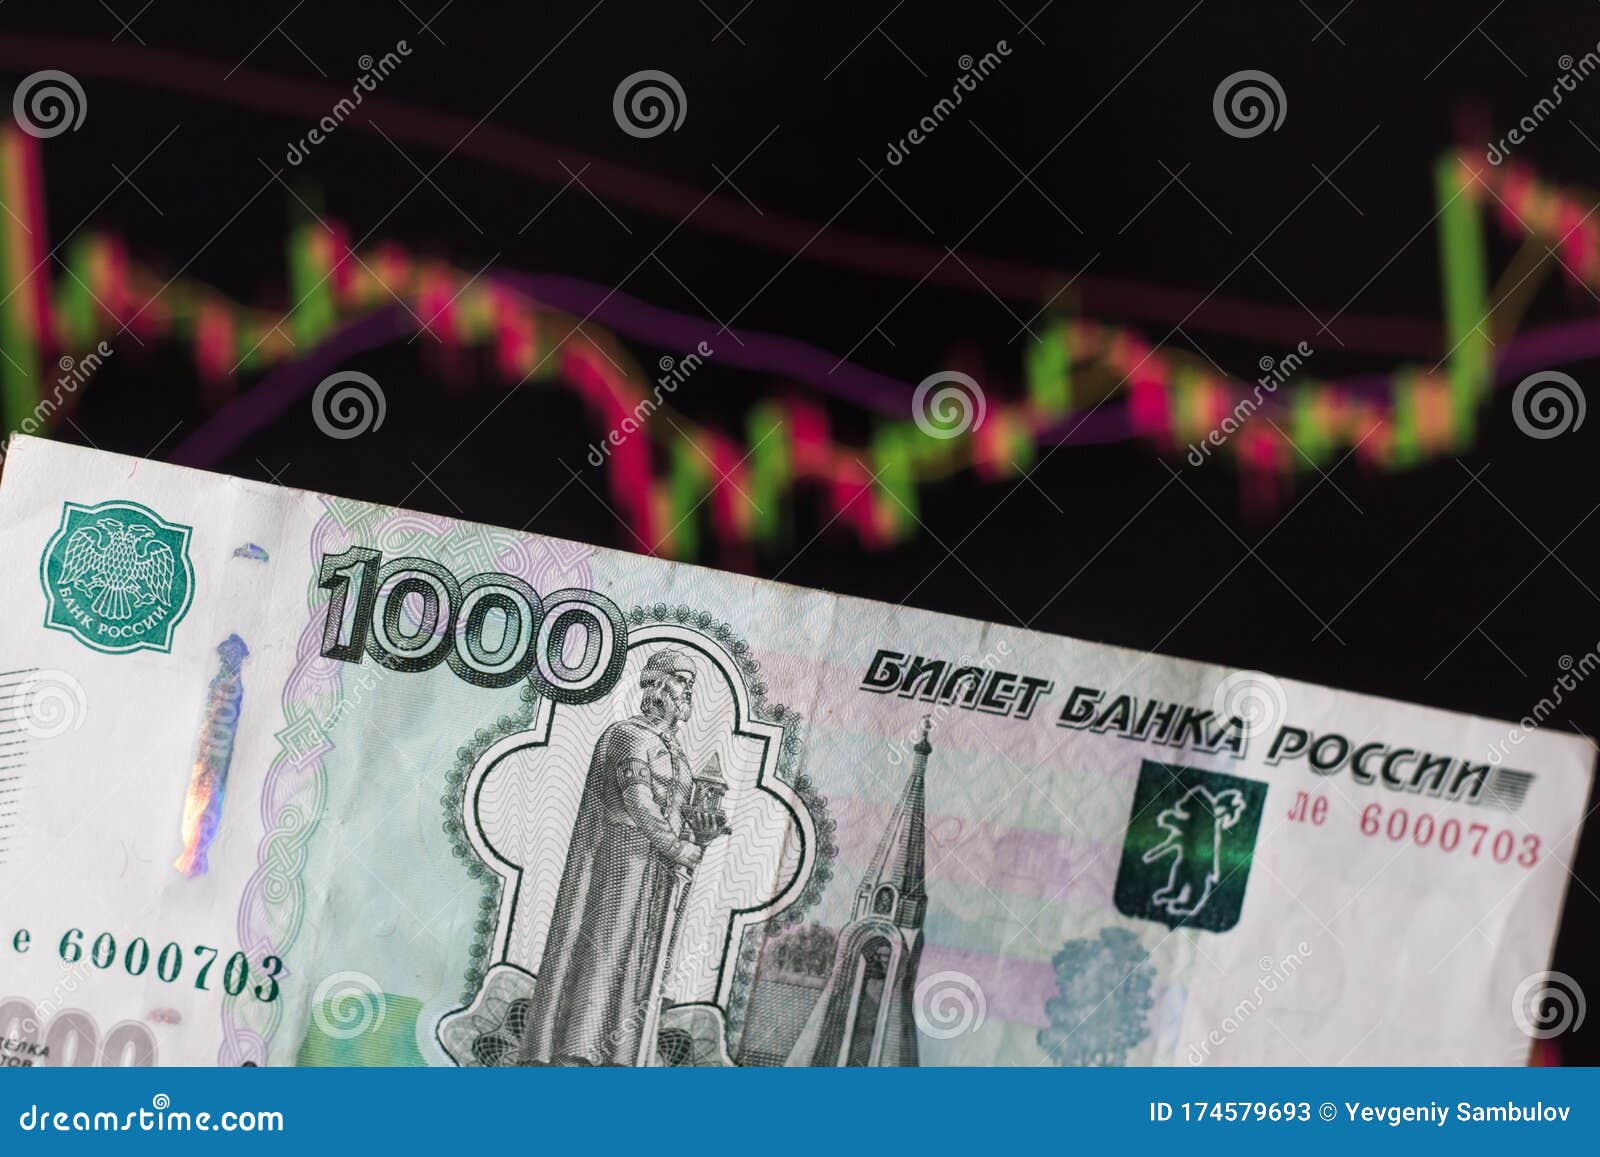 Ruble forex broker forex market analysis article